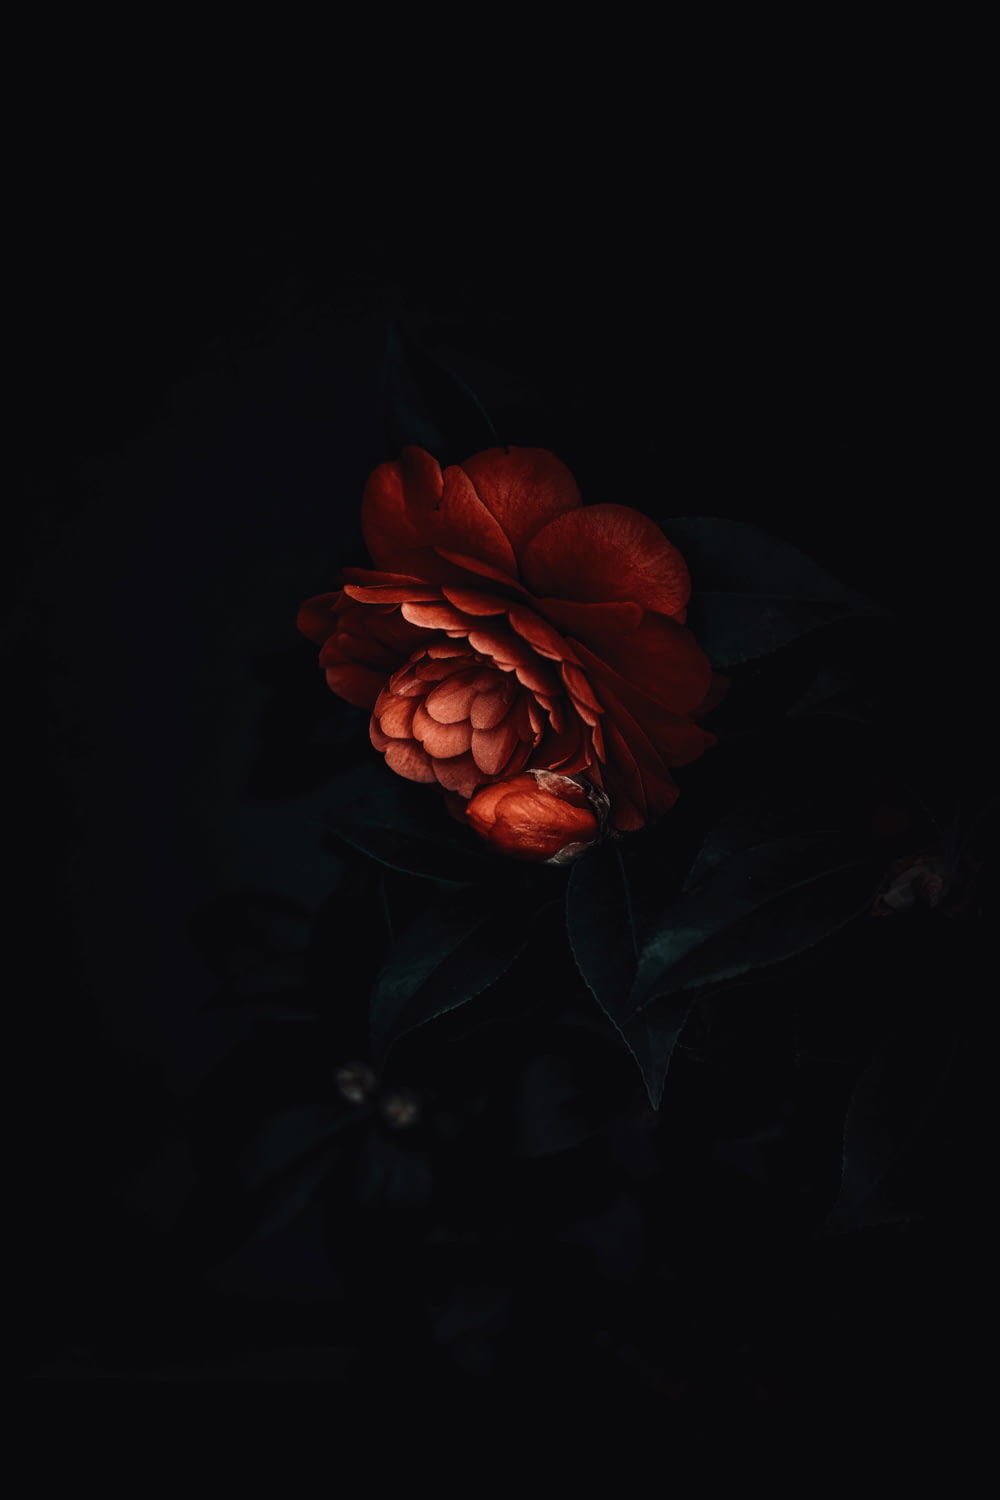 red flower in black background